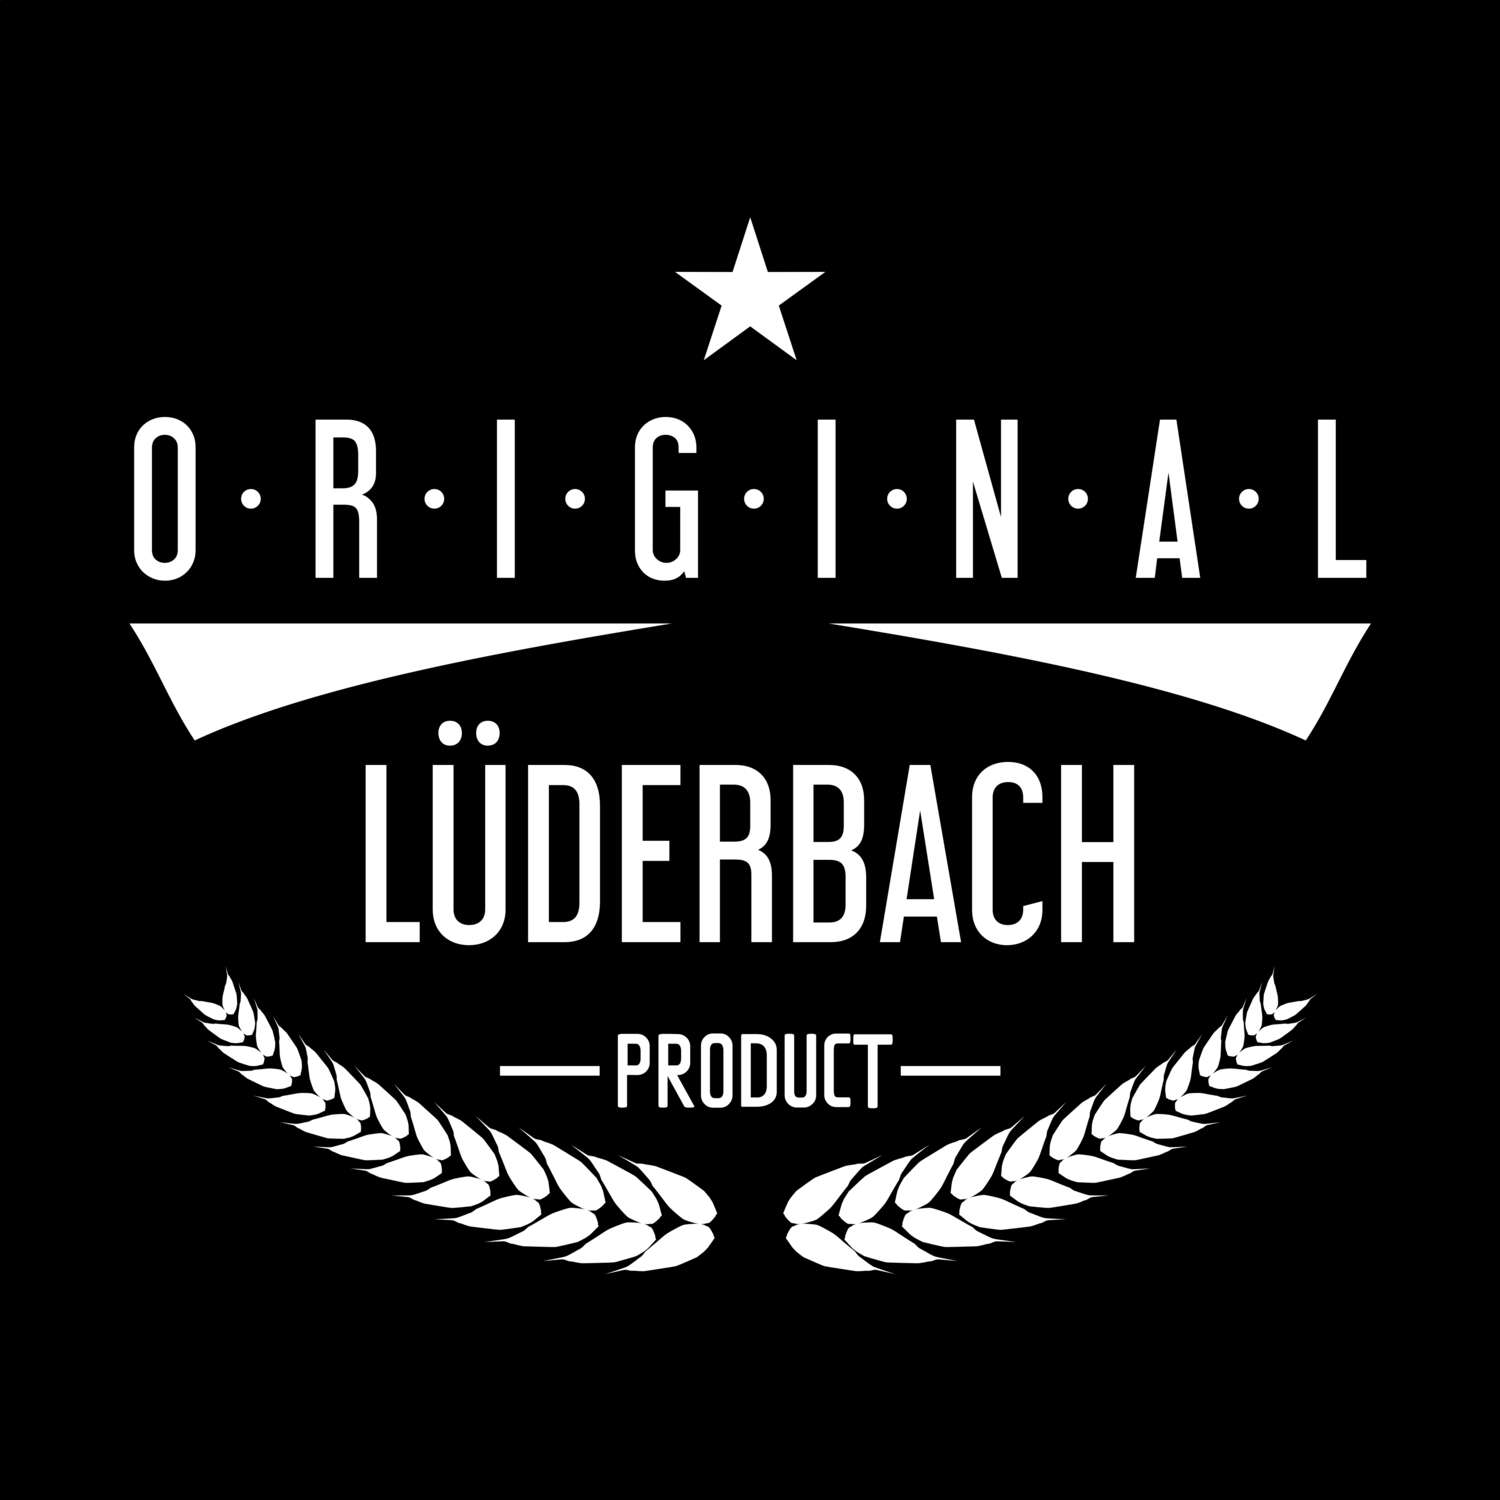 Lüderbach T-Shirt »Original Product«